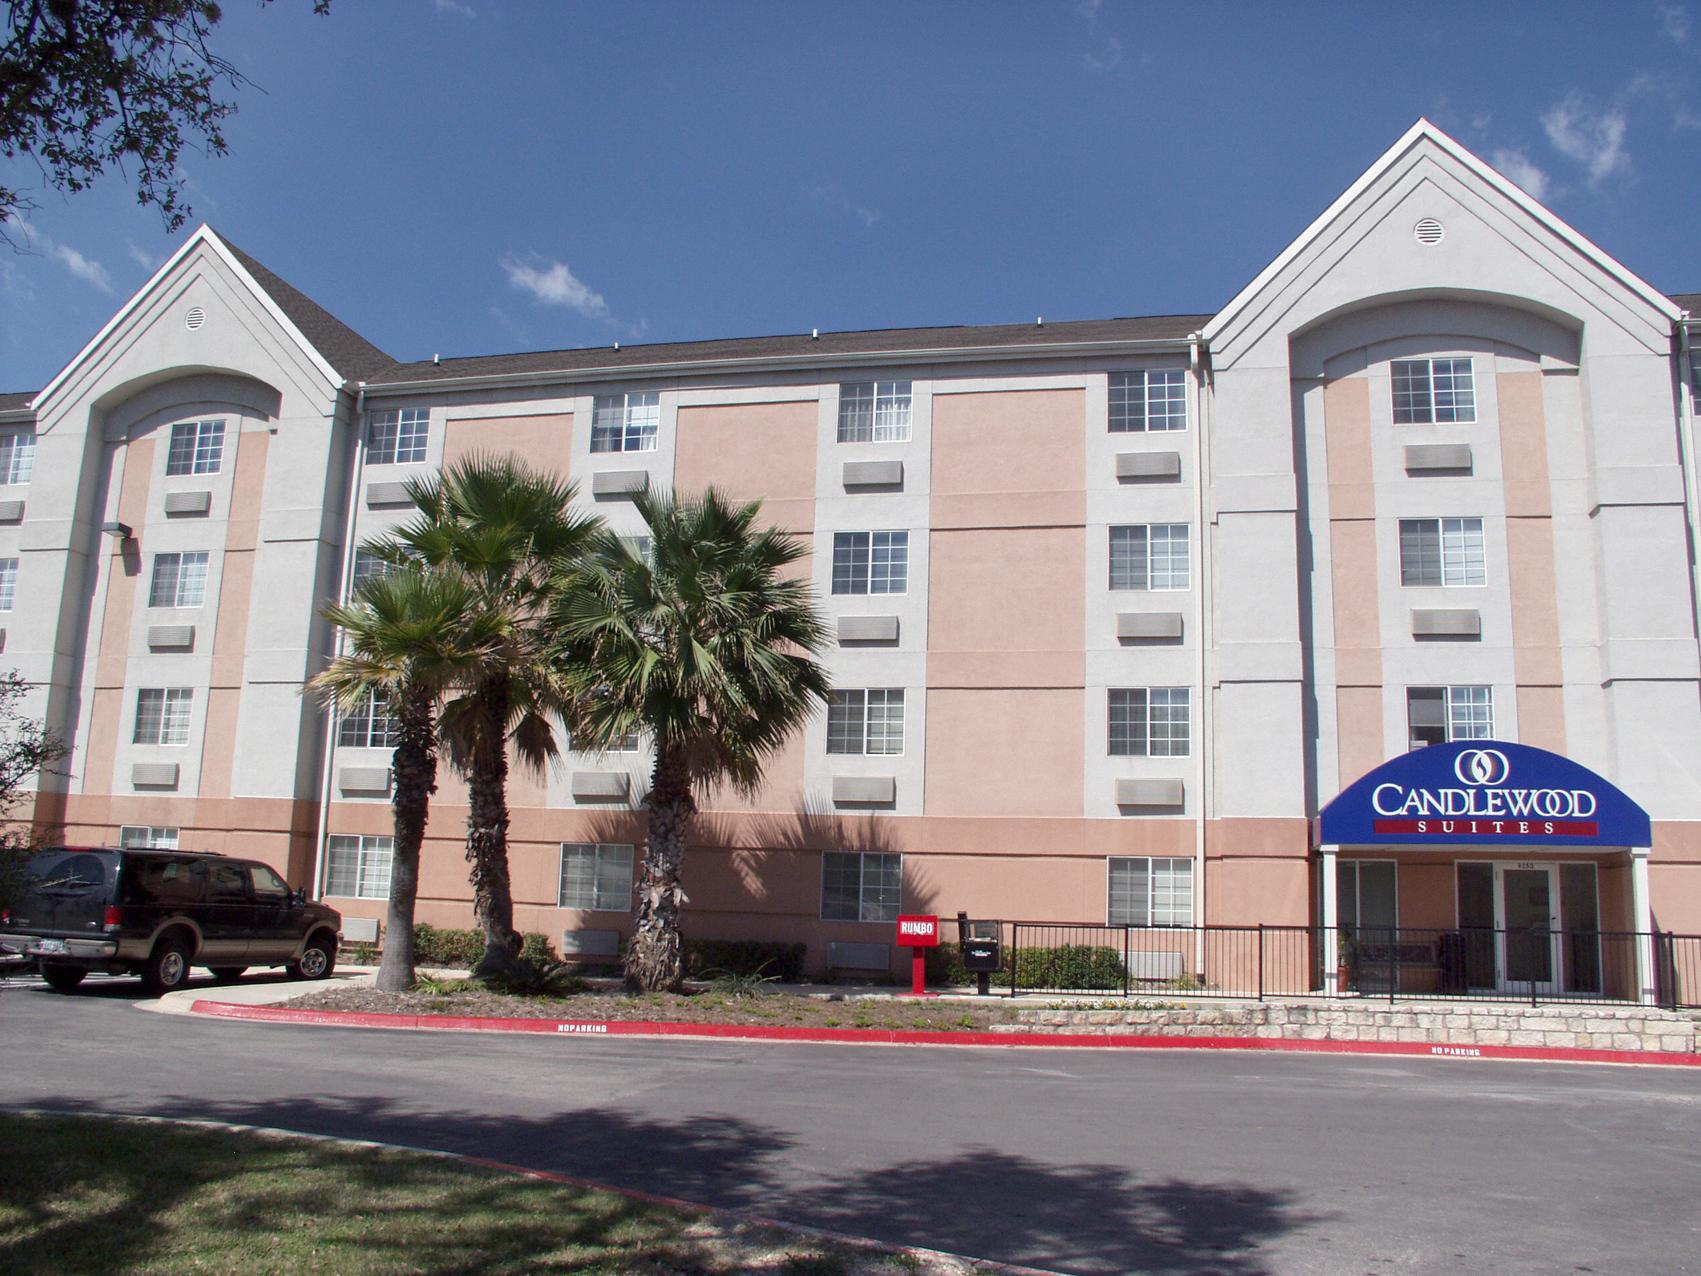 Photo of Candlewood Suites San Antonio, San Antonio, TX